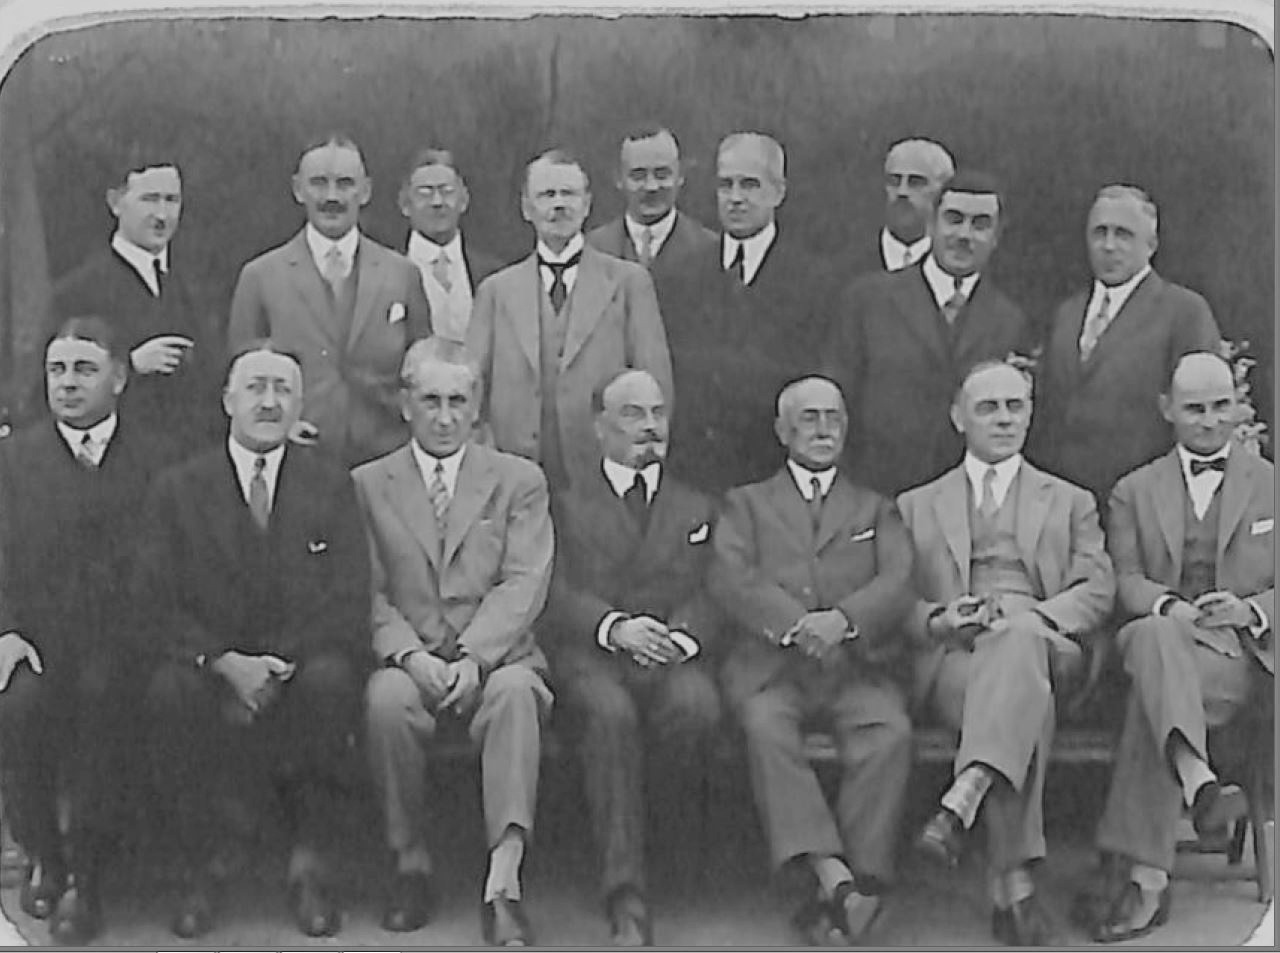 Delegates at the first meeting of CIRM at San Sebastian in 1928